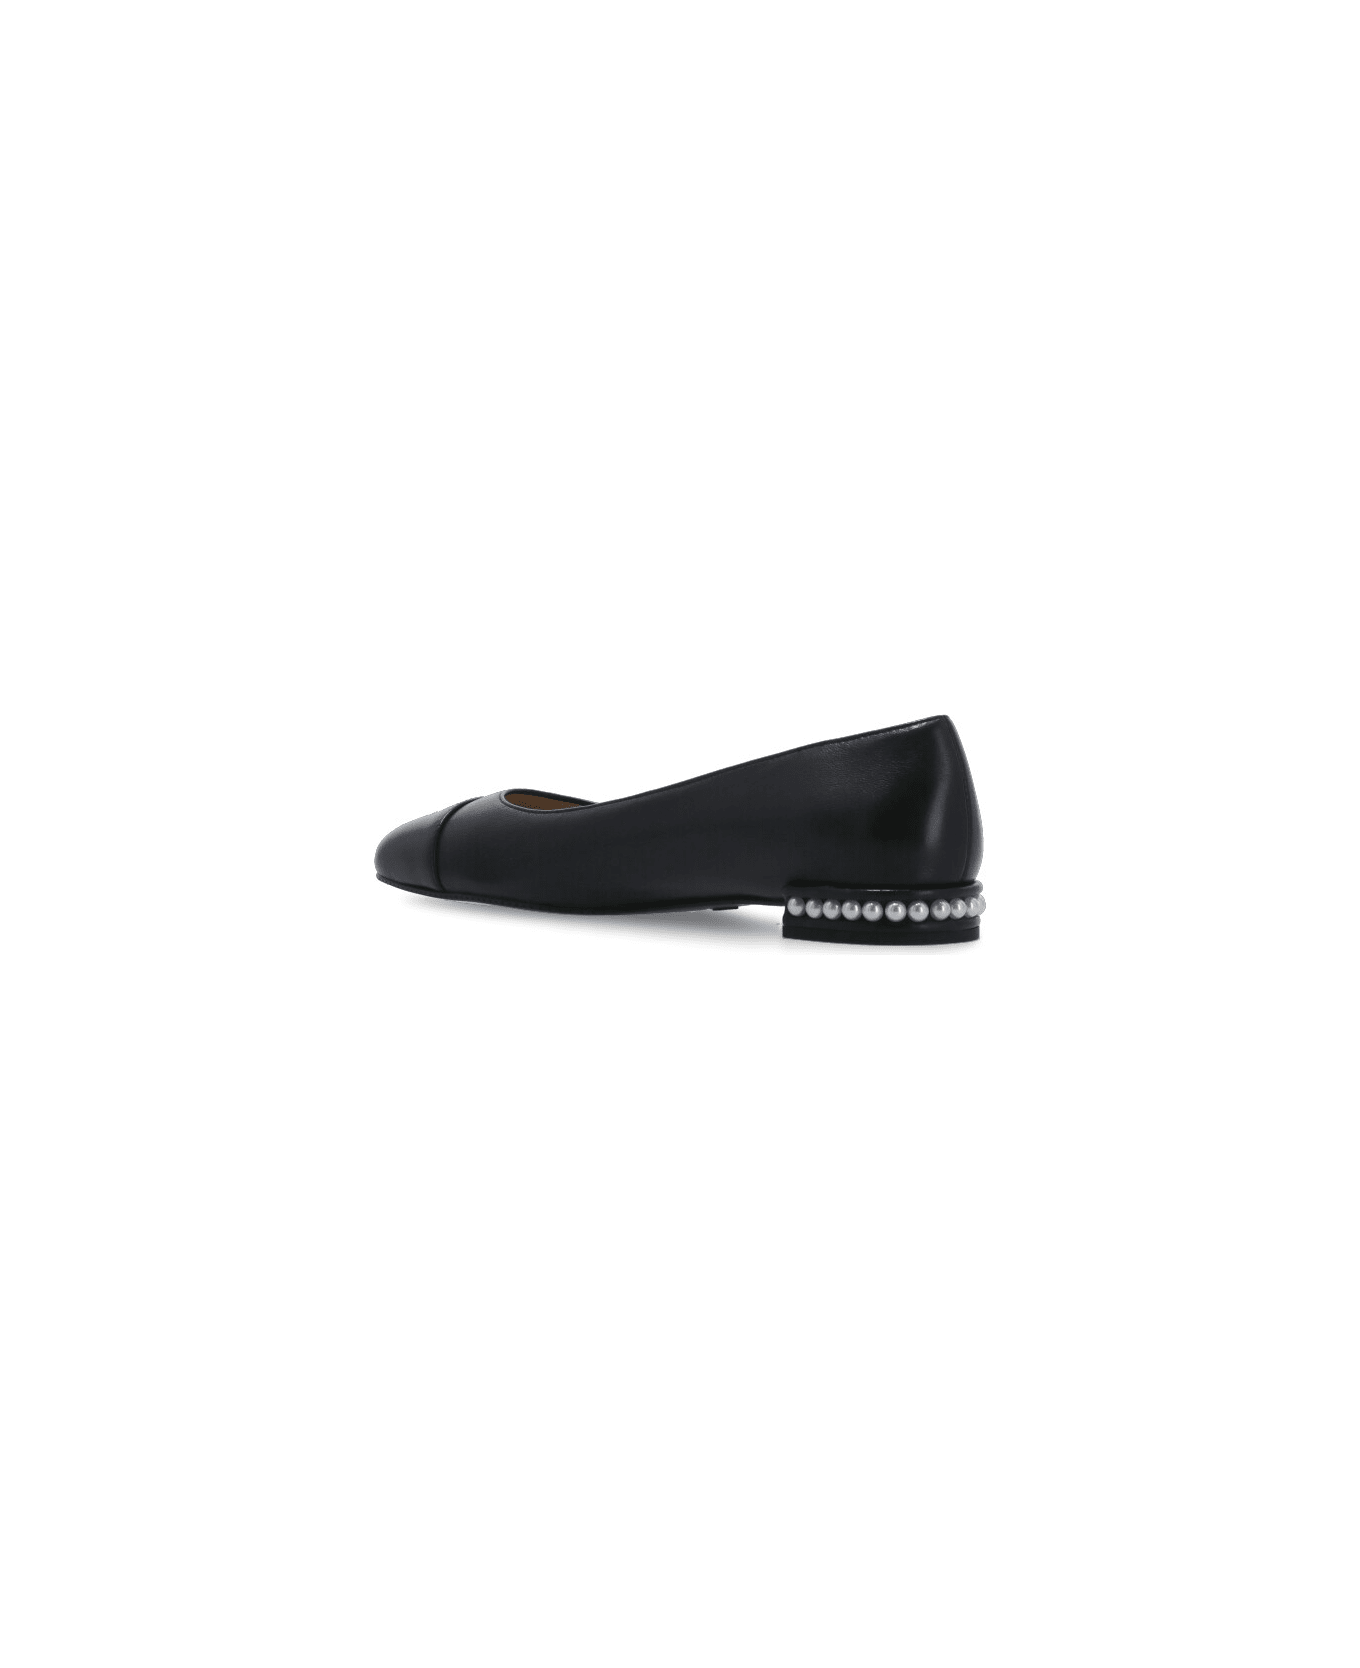 Stuart Weitzman Pearl Ballerina Shoes - Black